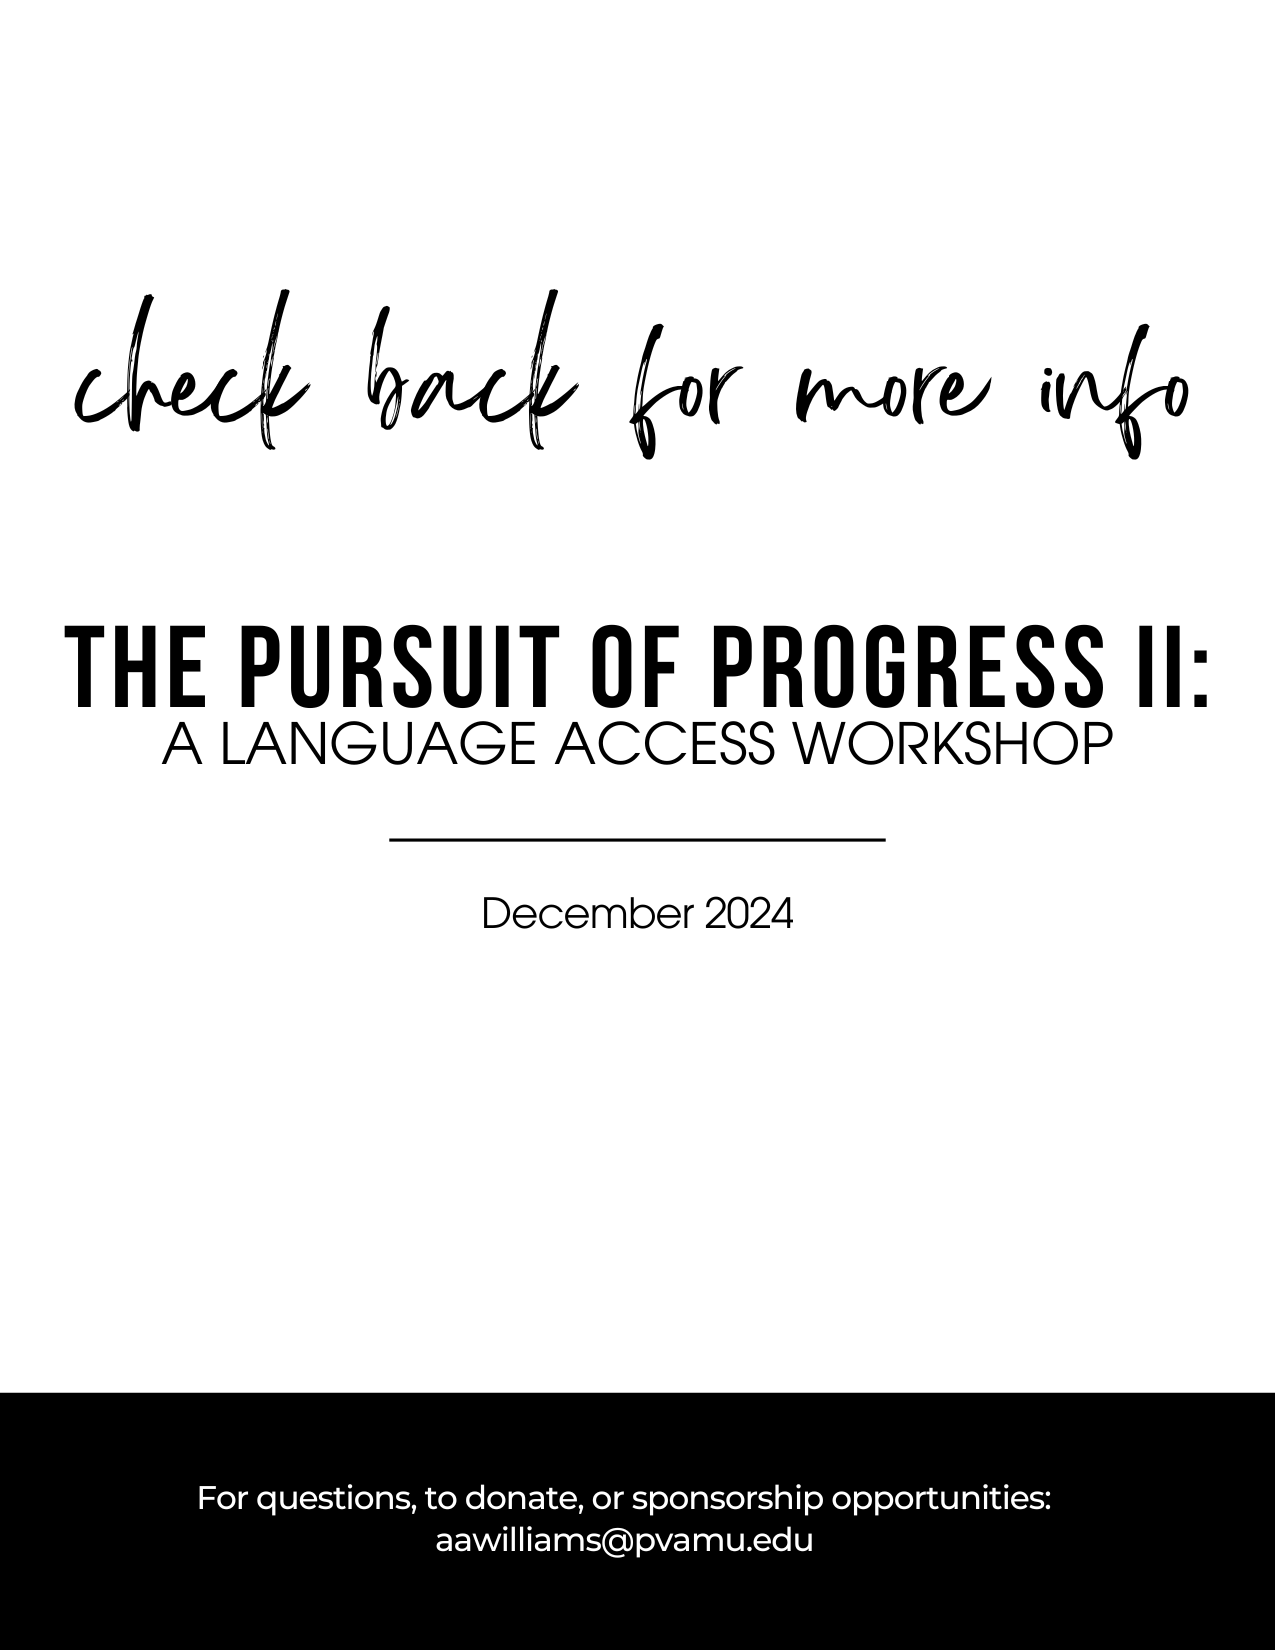 Pursuit of progress 2 workshop. Coming December 2024